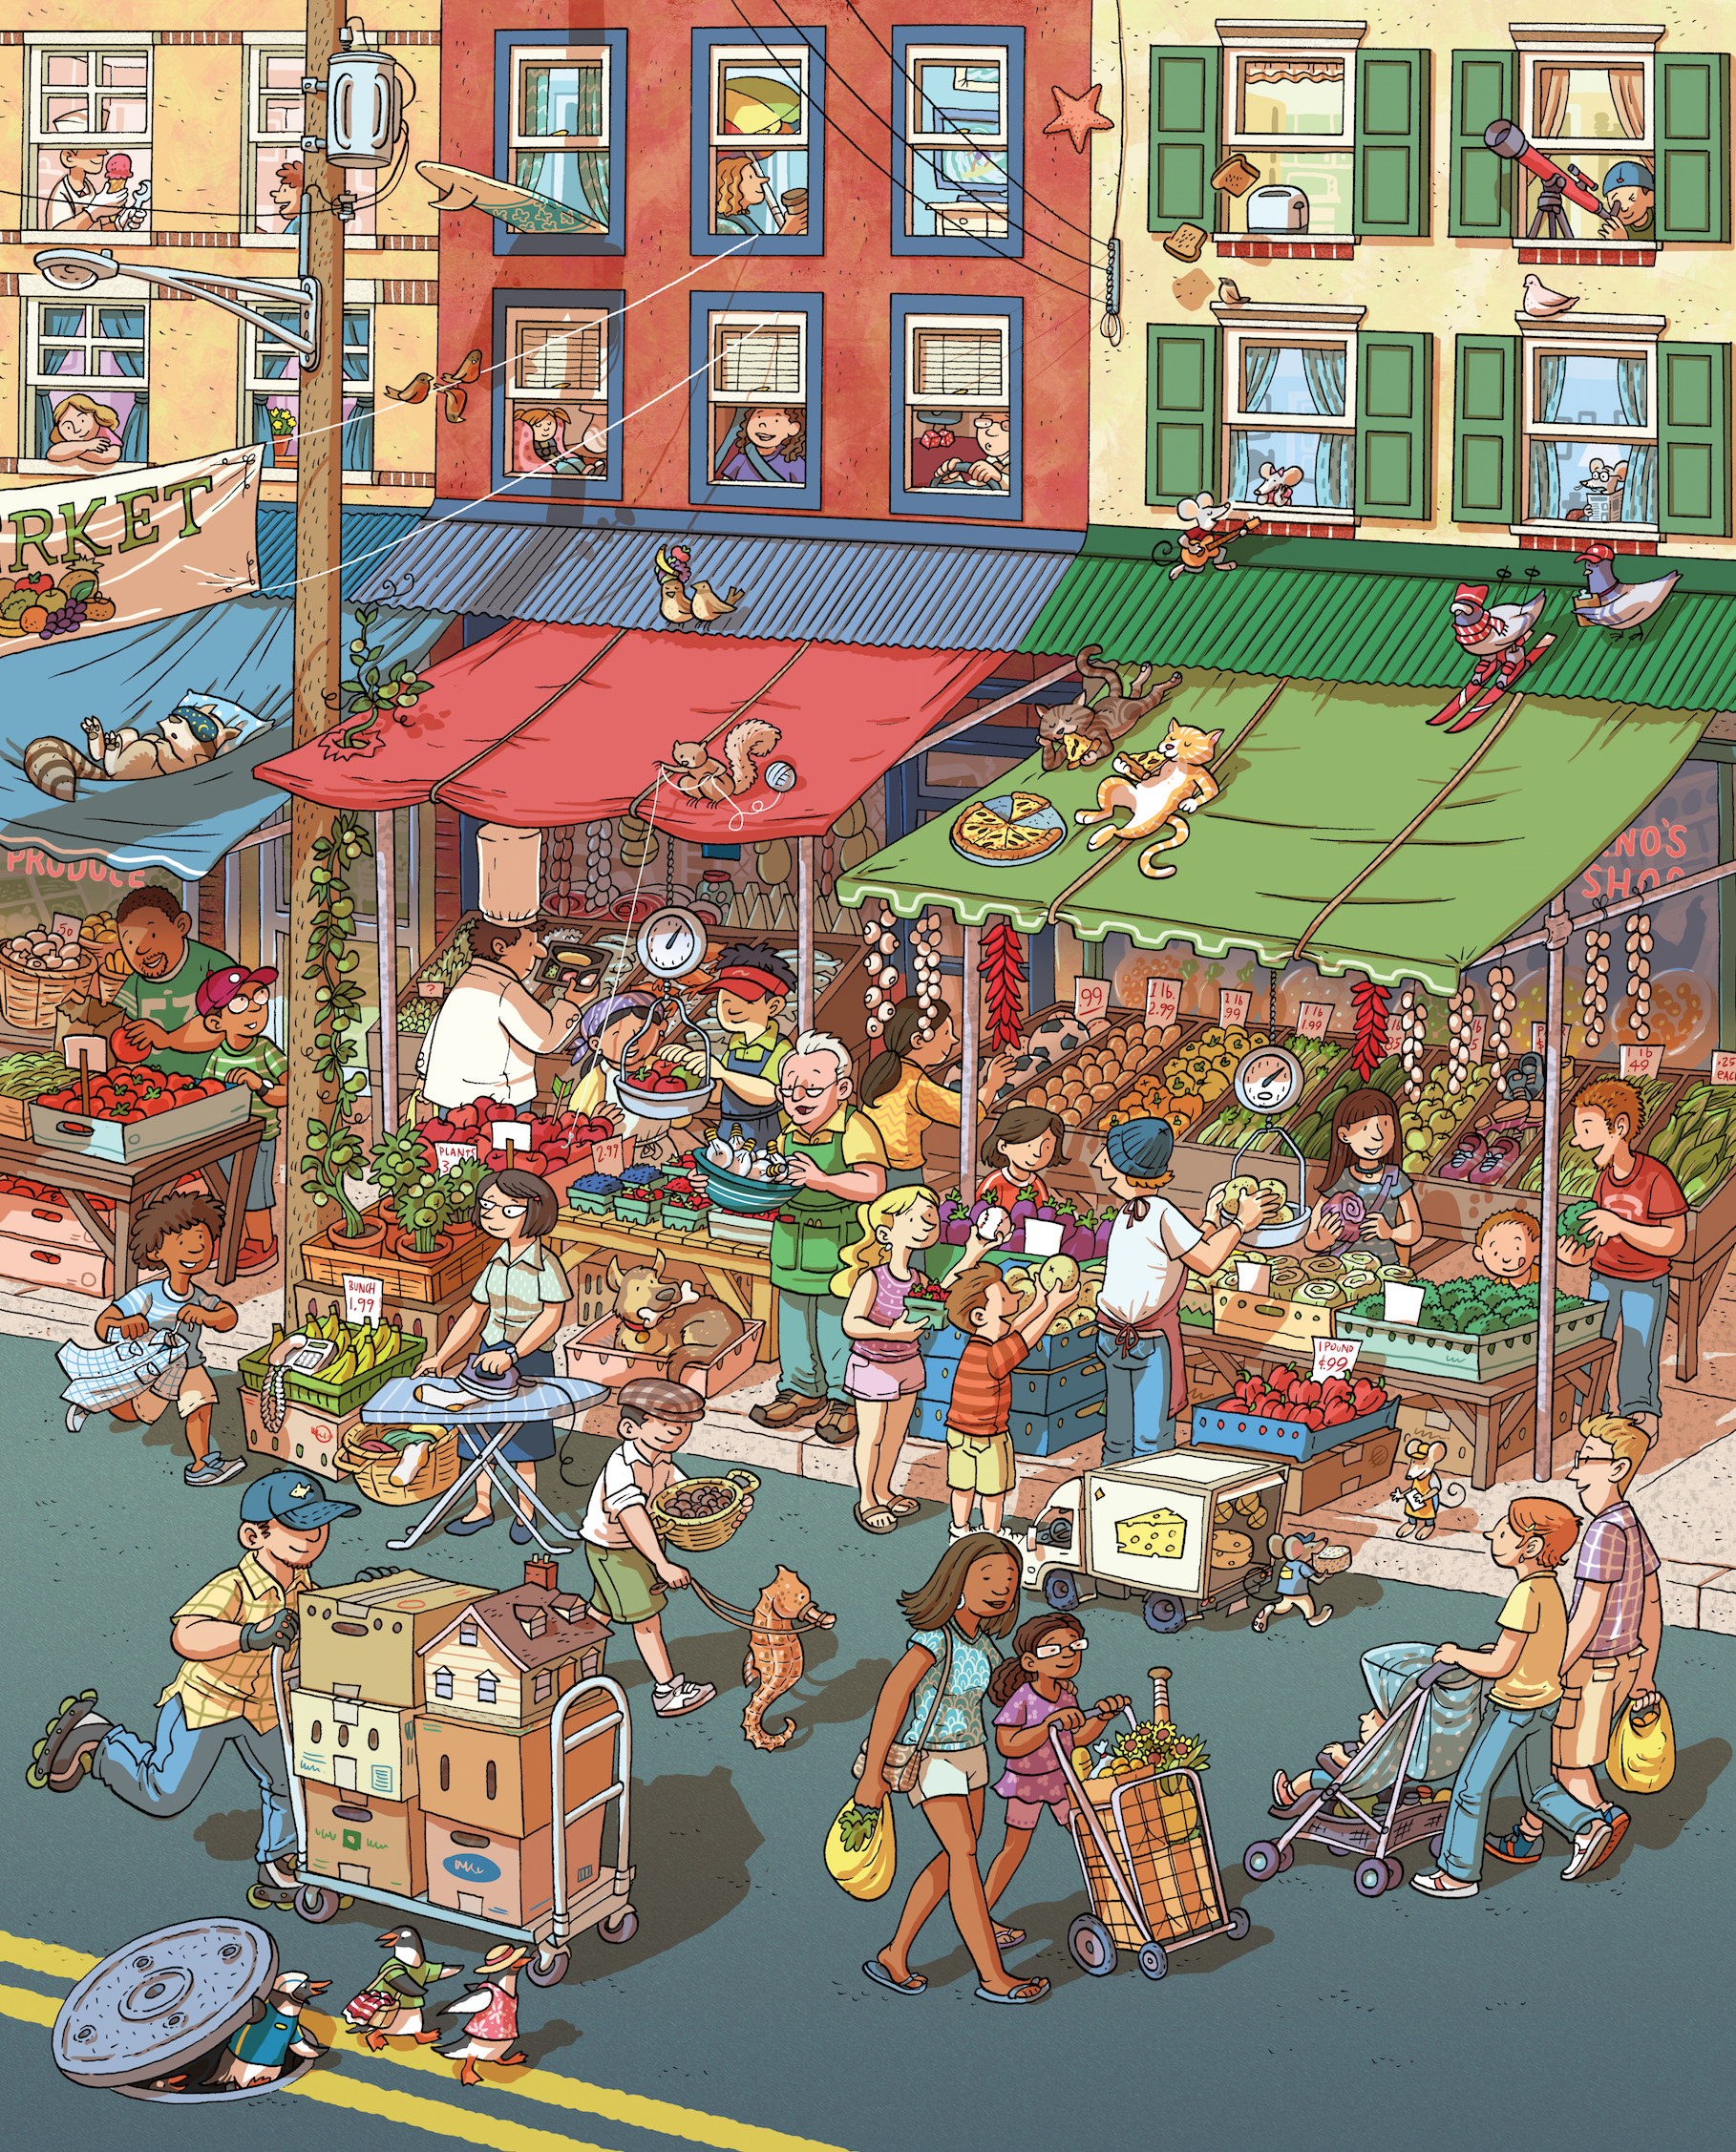 Objects and people. Рынок иллюстрация. Мультяшный город и рынок. Рынок рисунок. Базар иллюстрация.